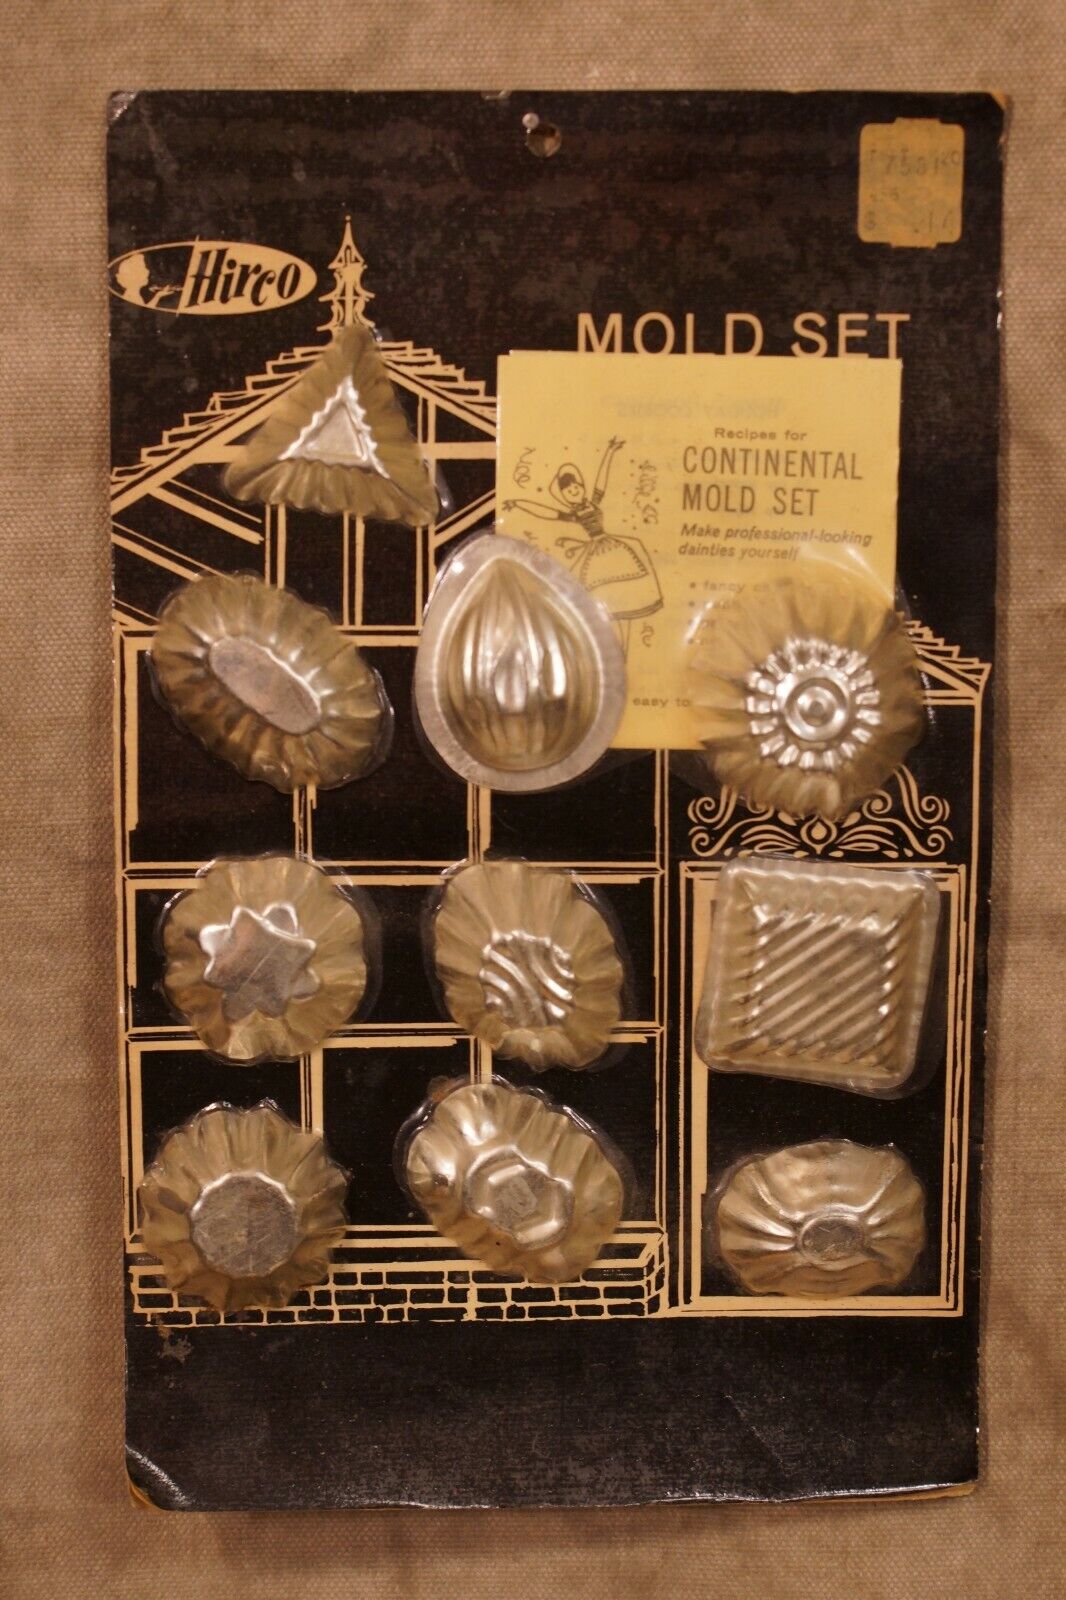 Vintage Retro Hirco NOS Chocolate Mold Set in Original Package